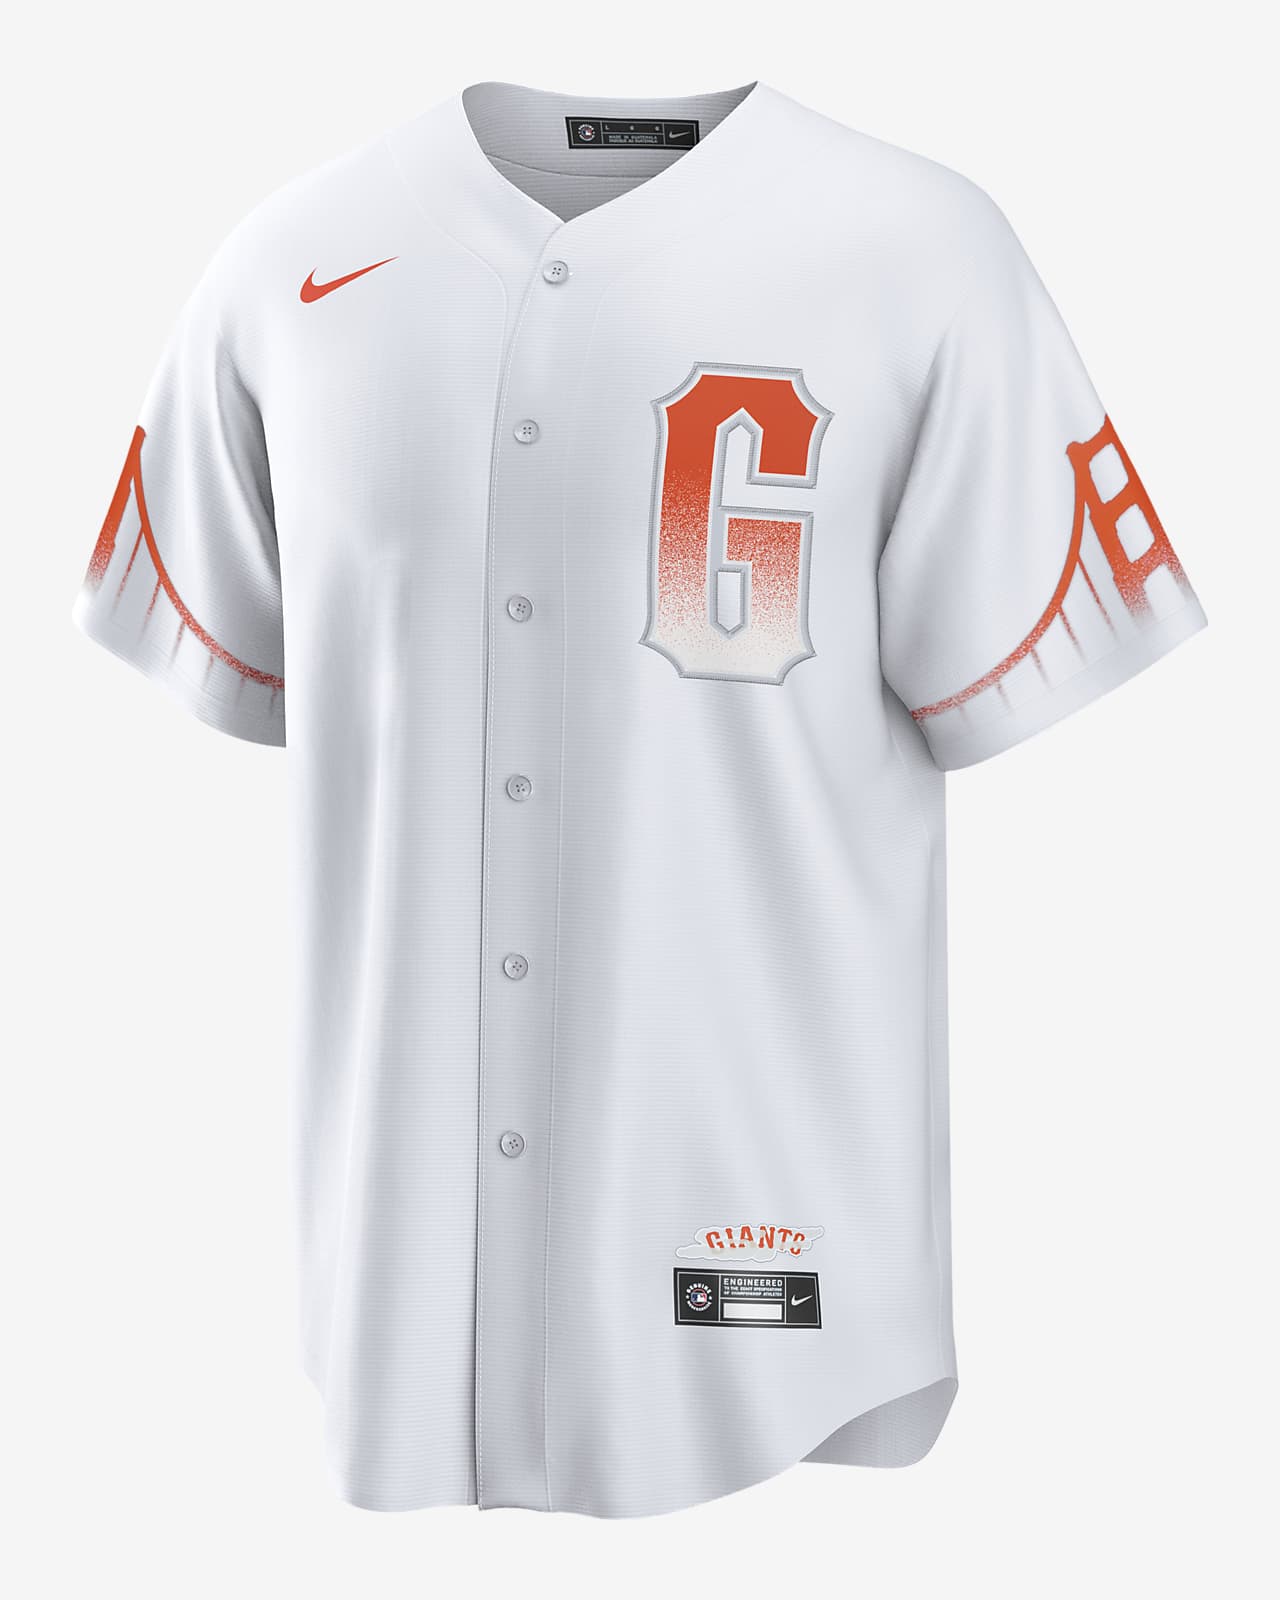 MLB San Francisco Giants City Connect (Brandon Crawford) Men's Replica  Baseball Jersey